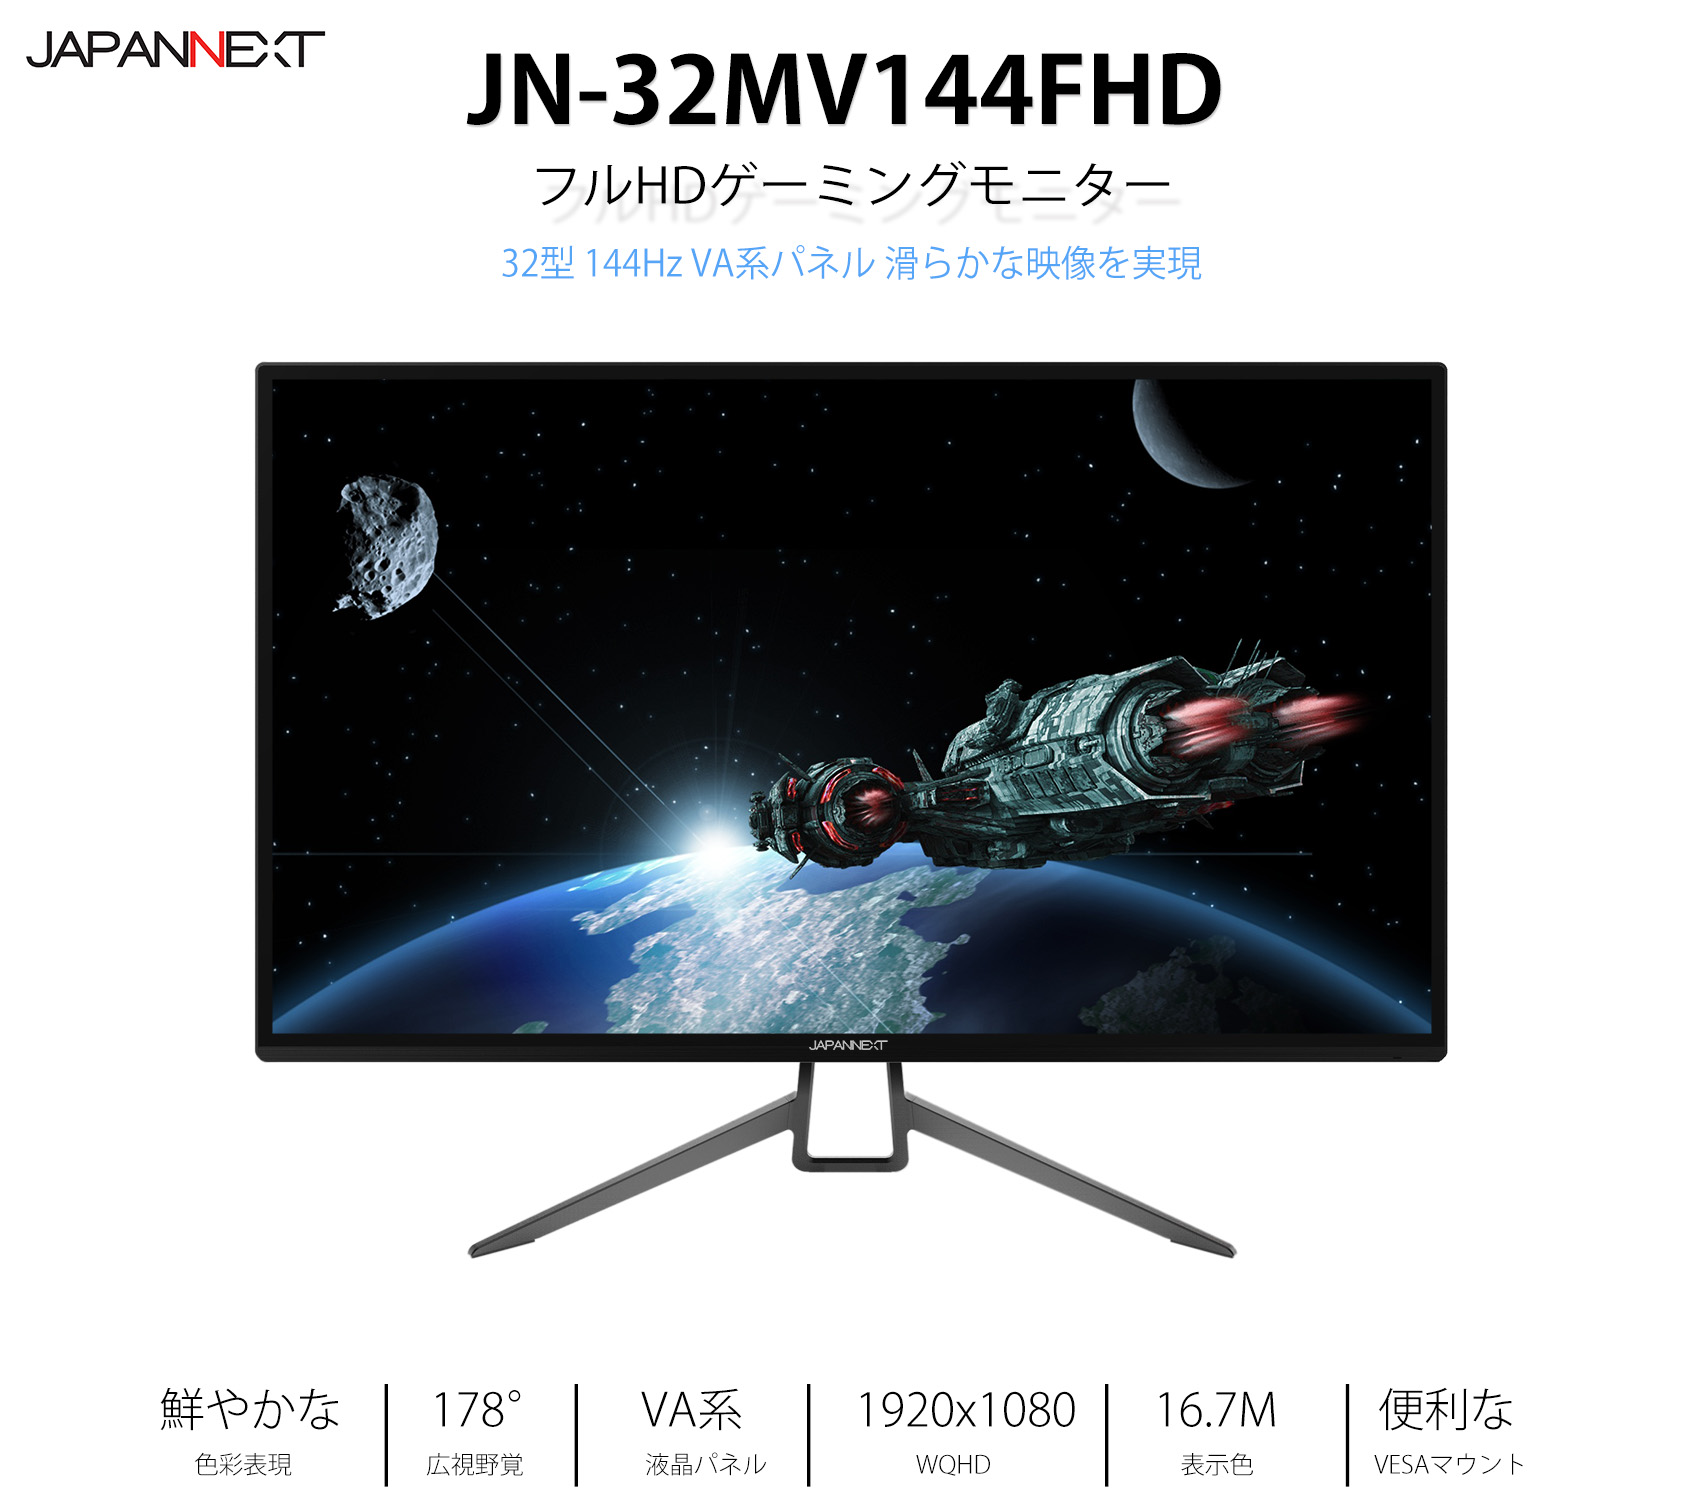 JN-T2820UHD-S specs